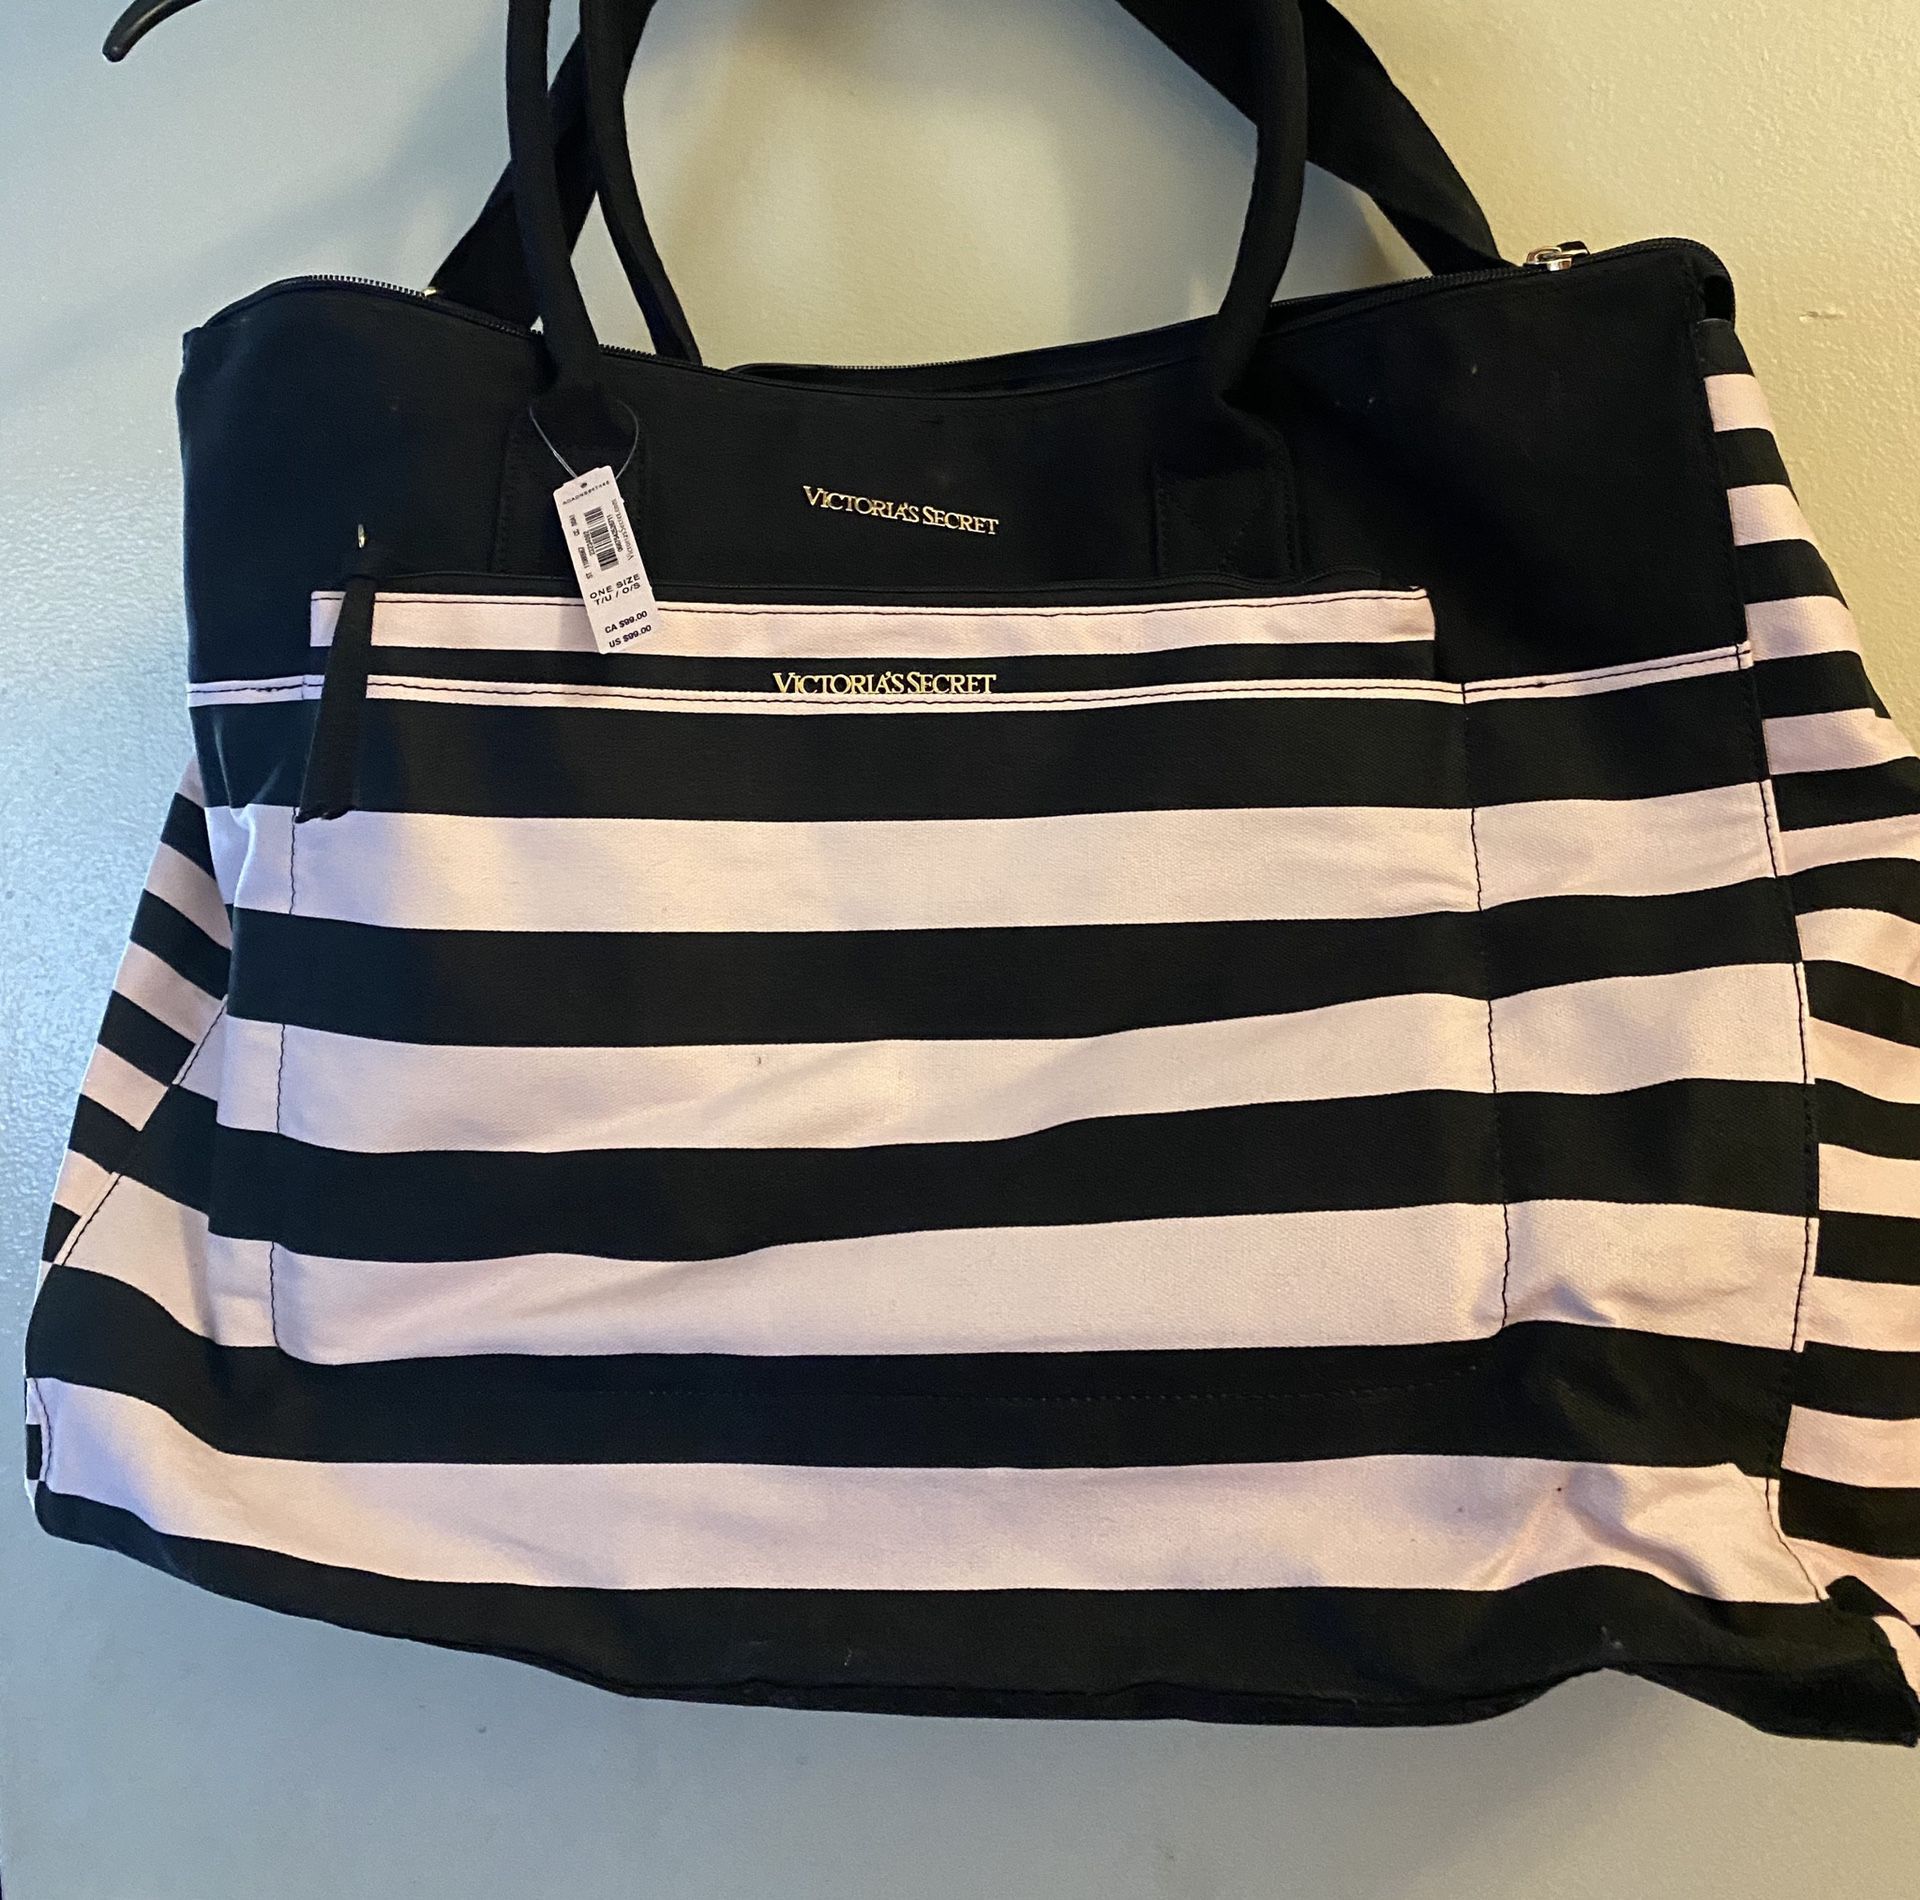 Victoria’s Secret Tote Duffle Bag NWT